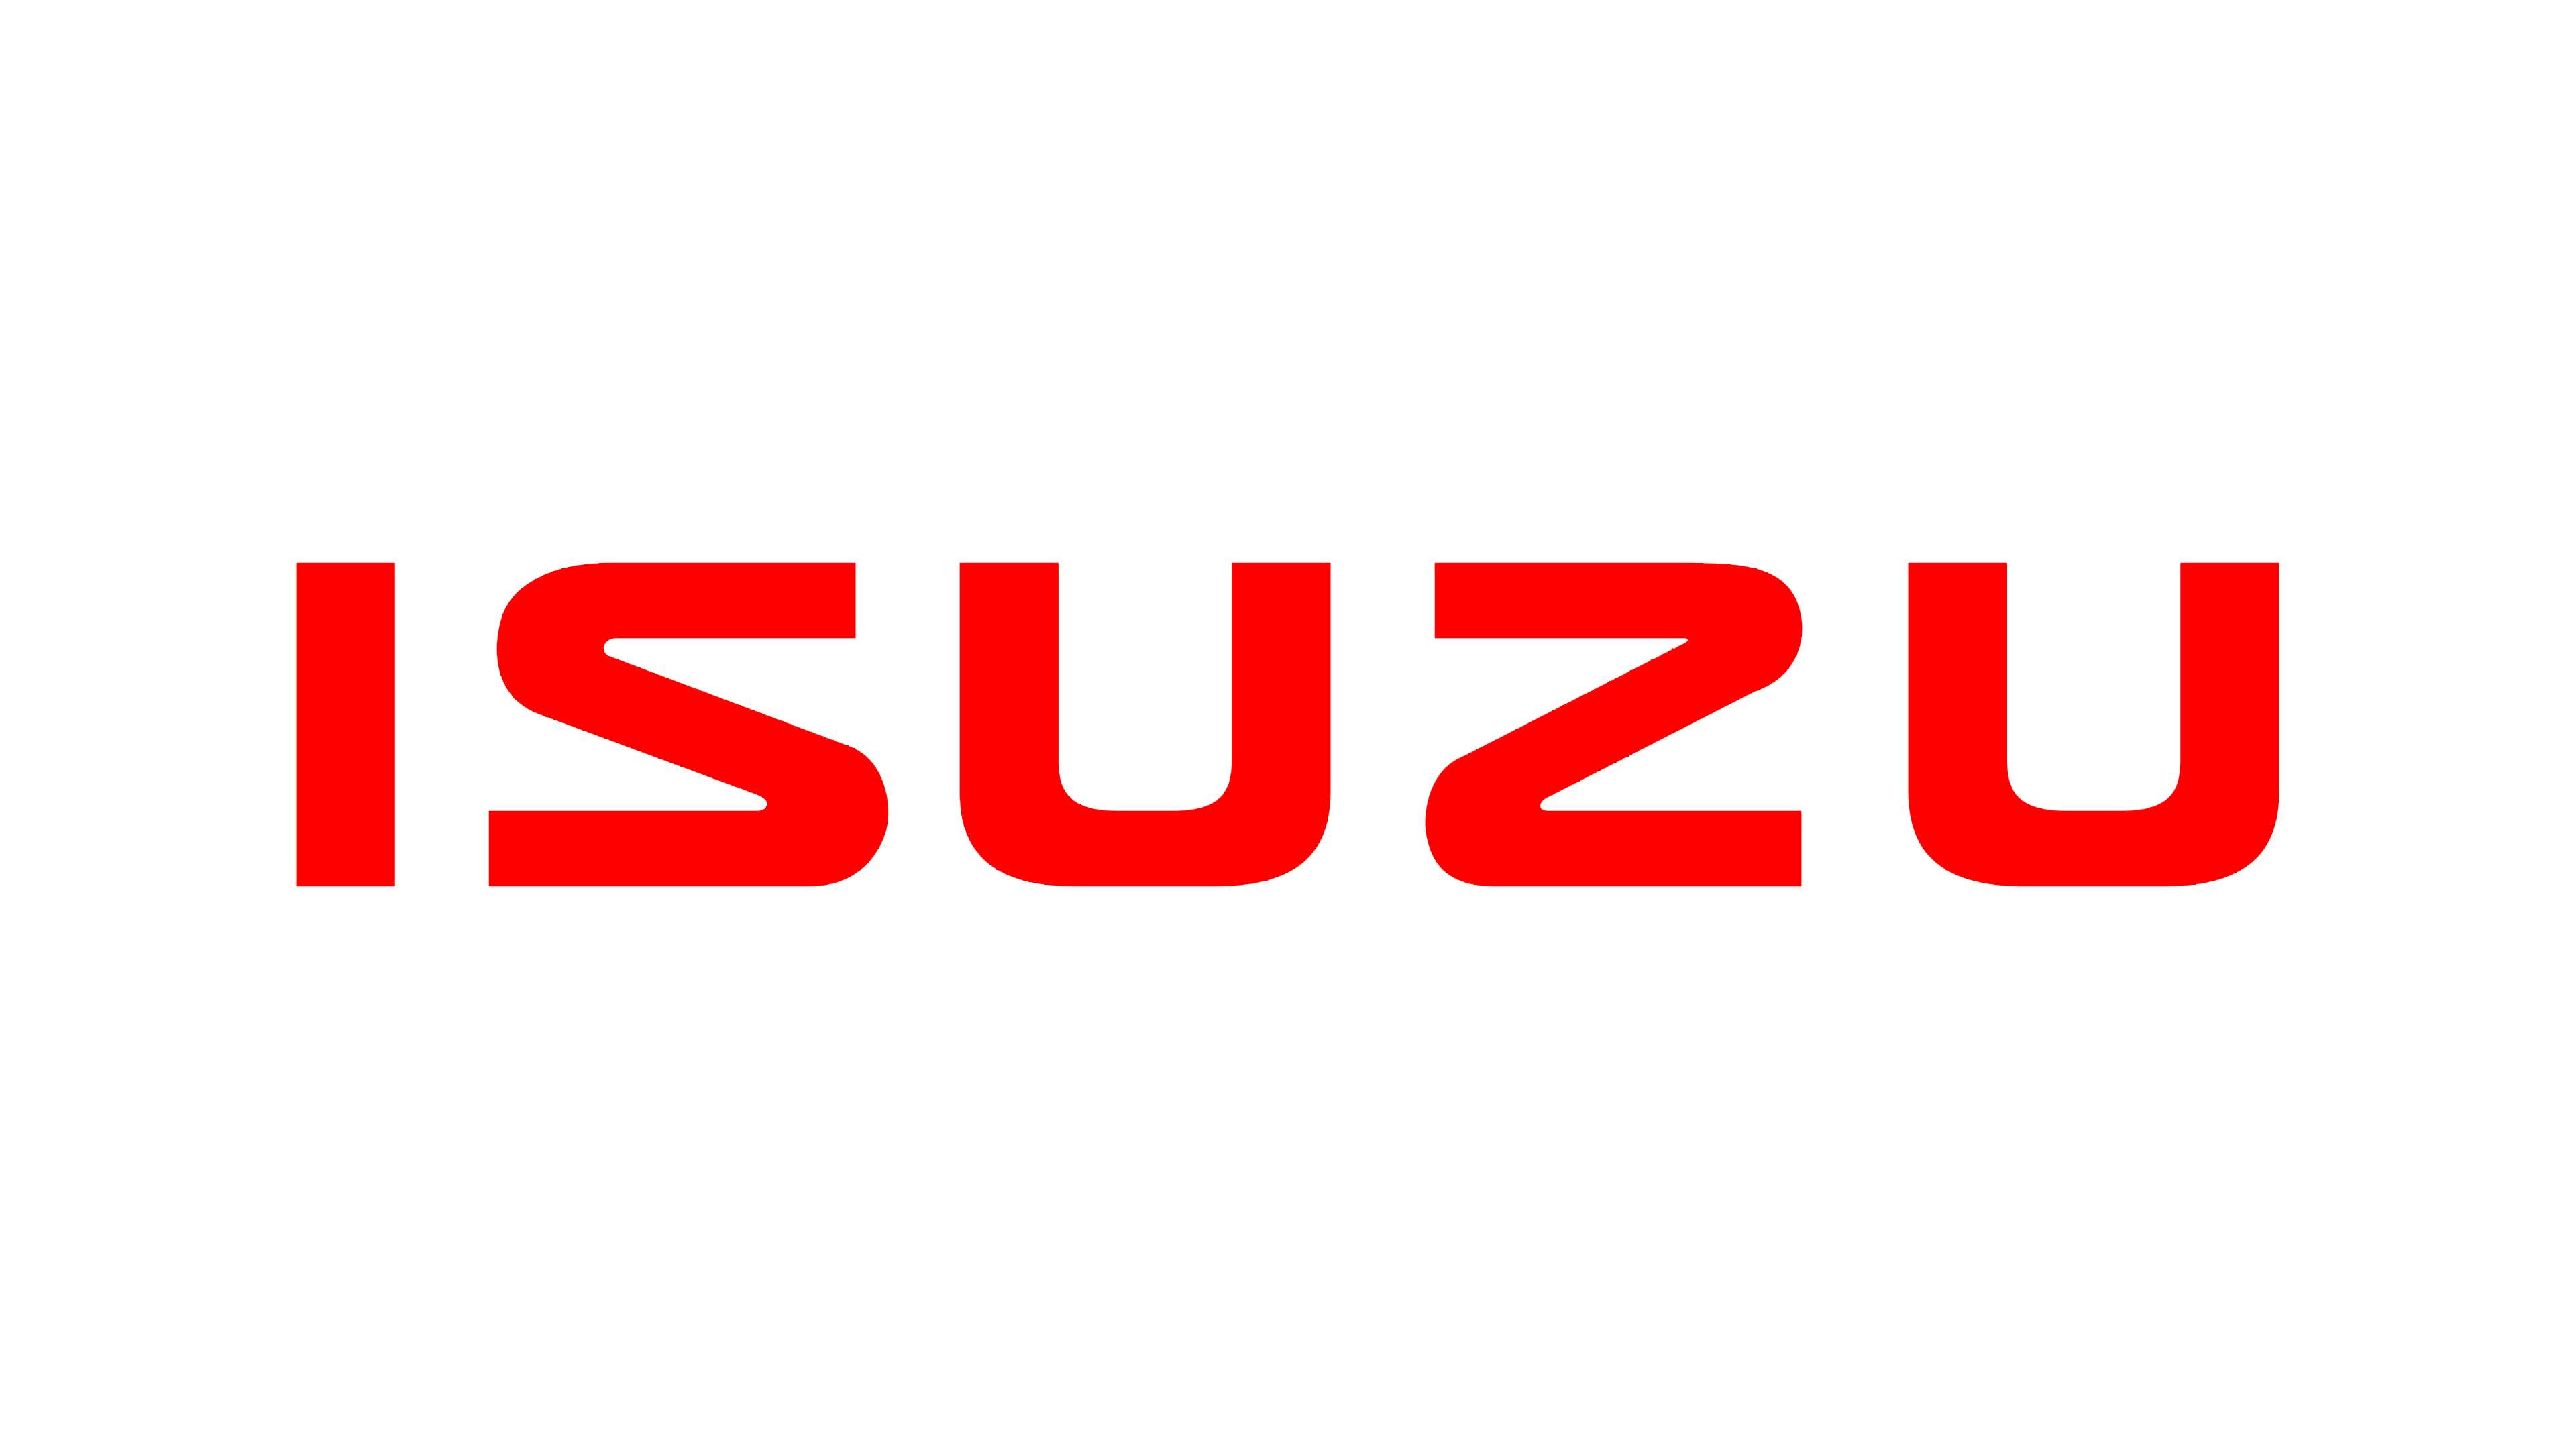 Car Brand Logo - Isuzu